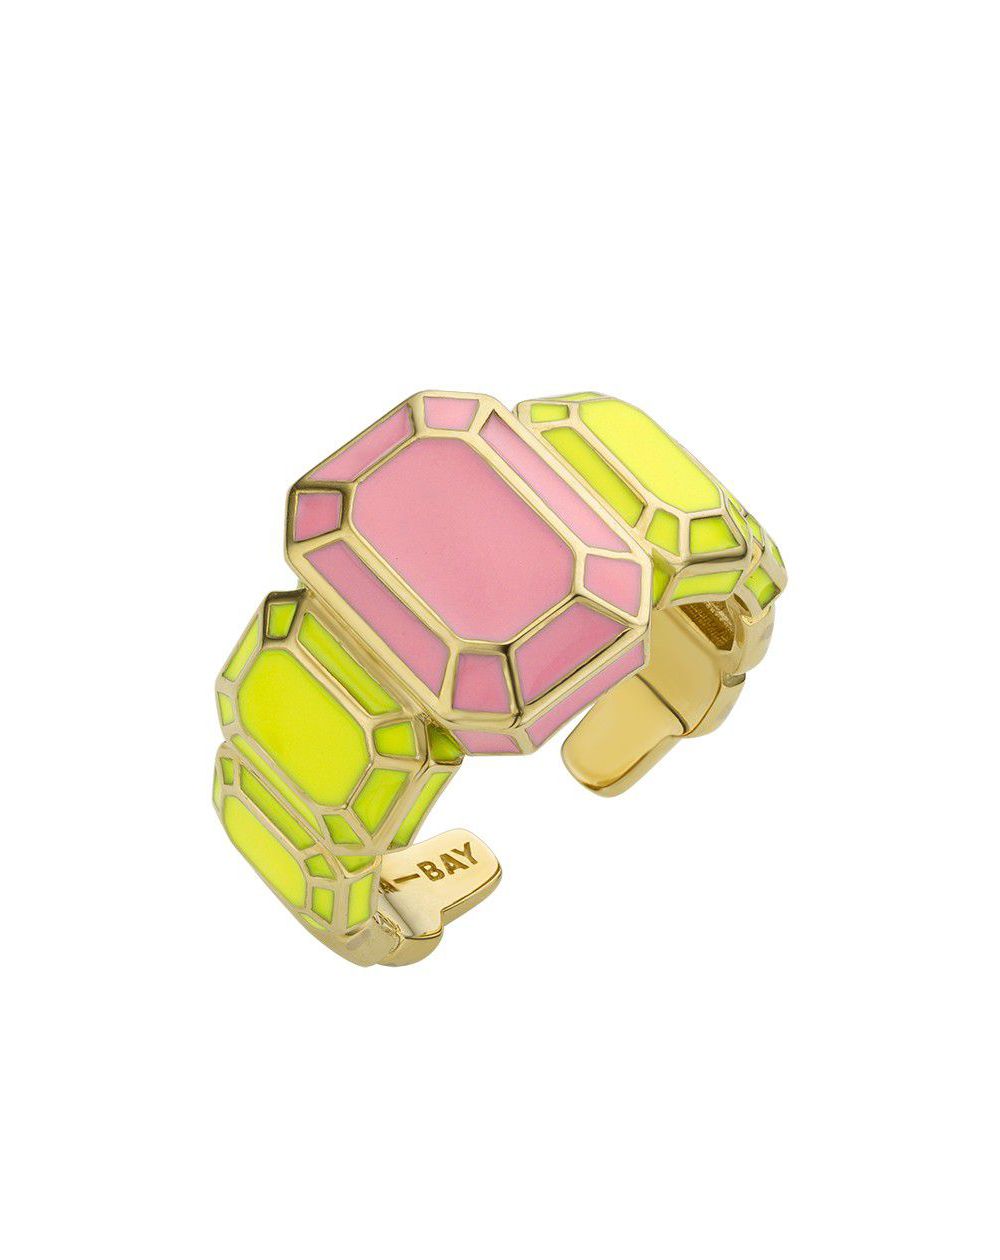 Bague Mya Bay pink diamond - BA-237 - Bijoux de marque MYA BAY